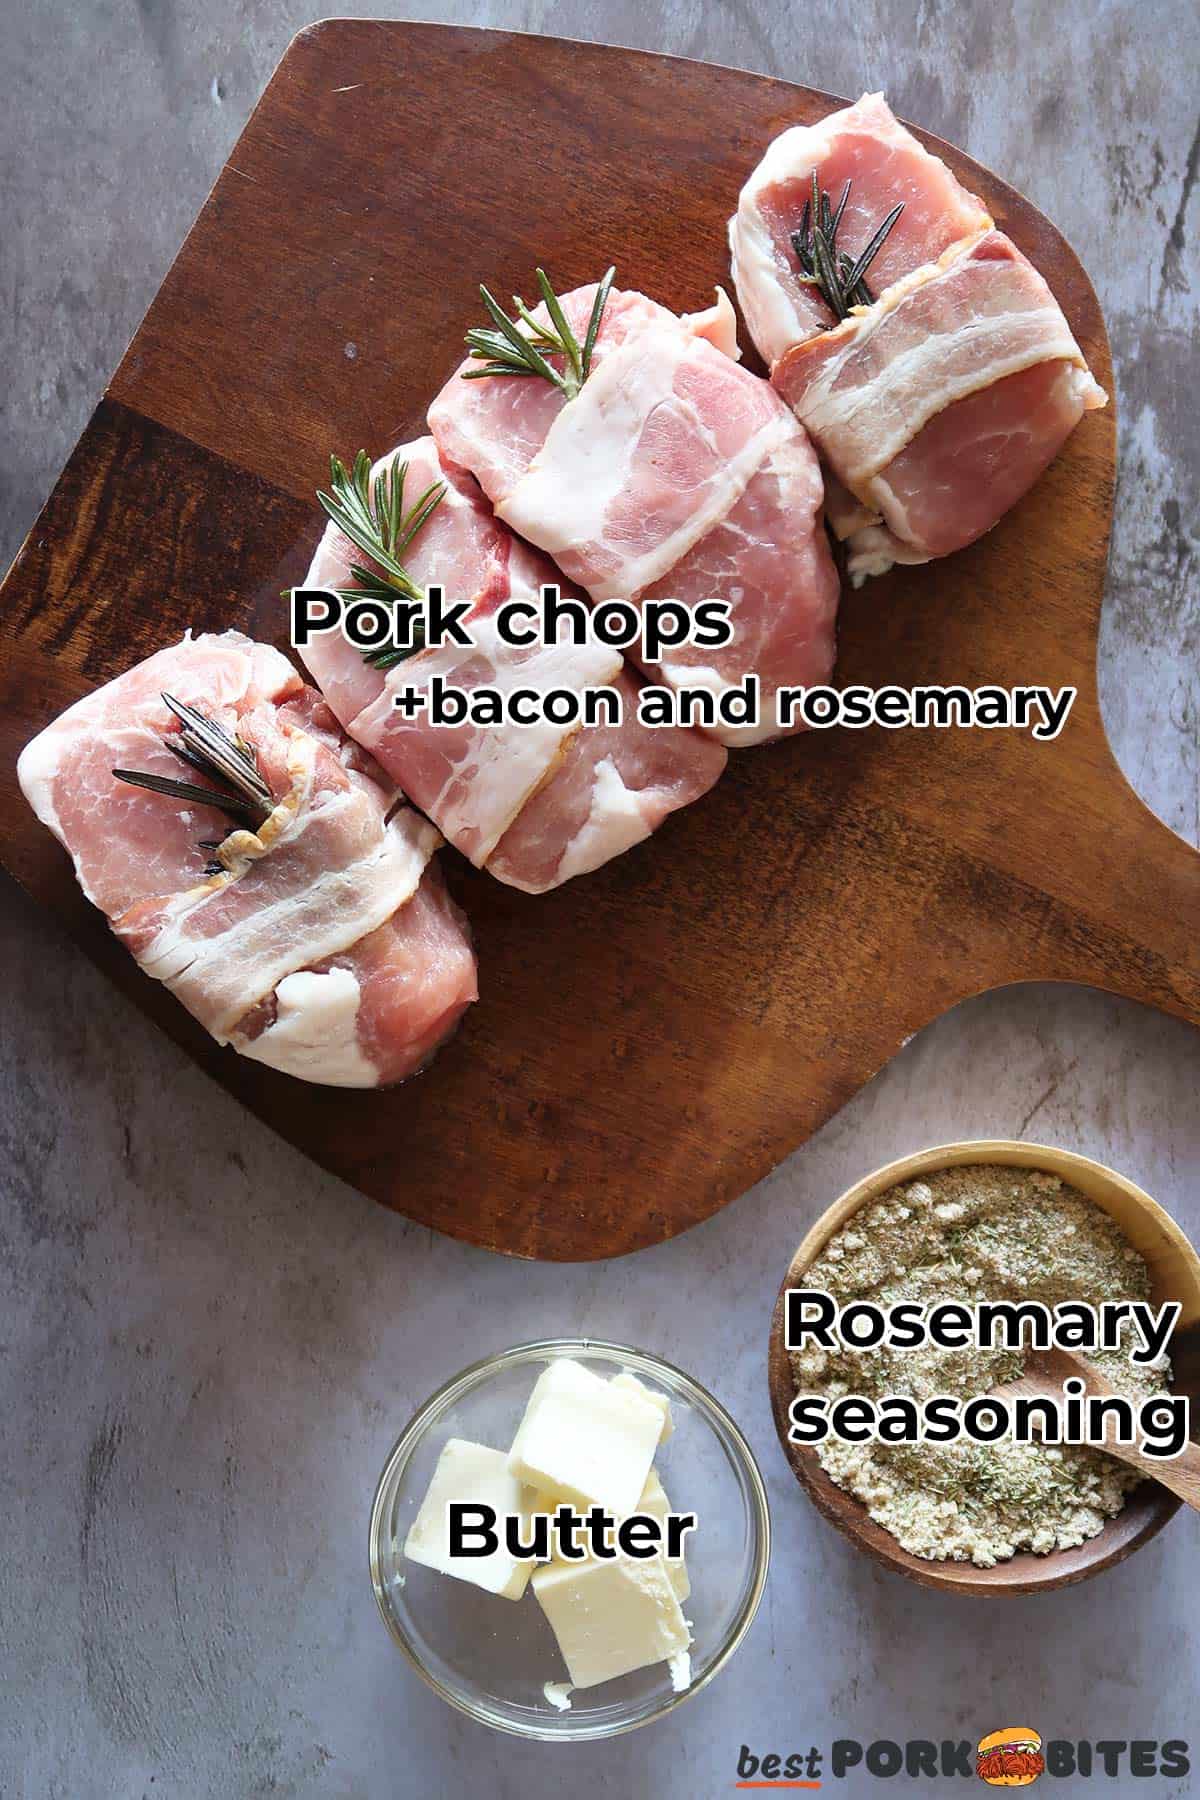 sous vide pork chops ingredients with labels